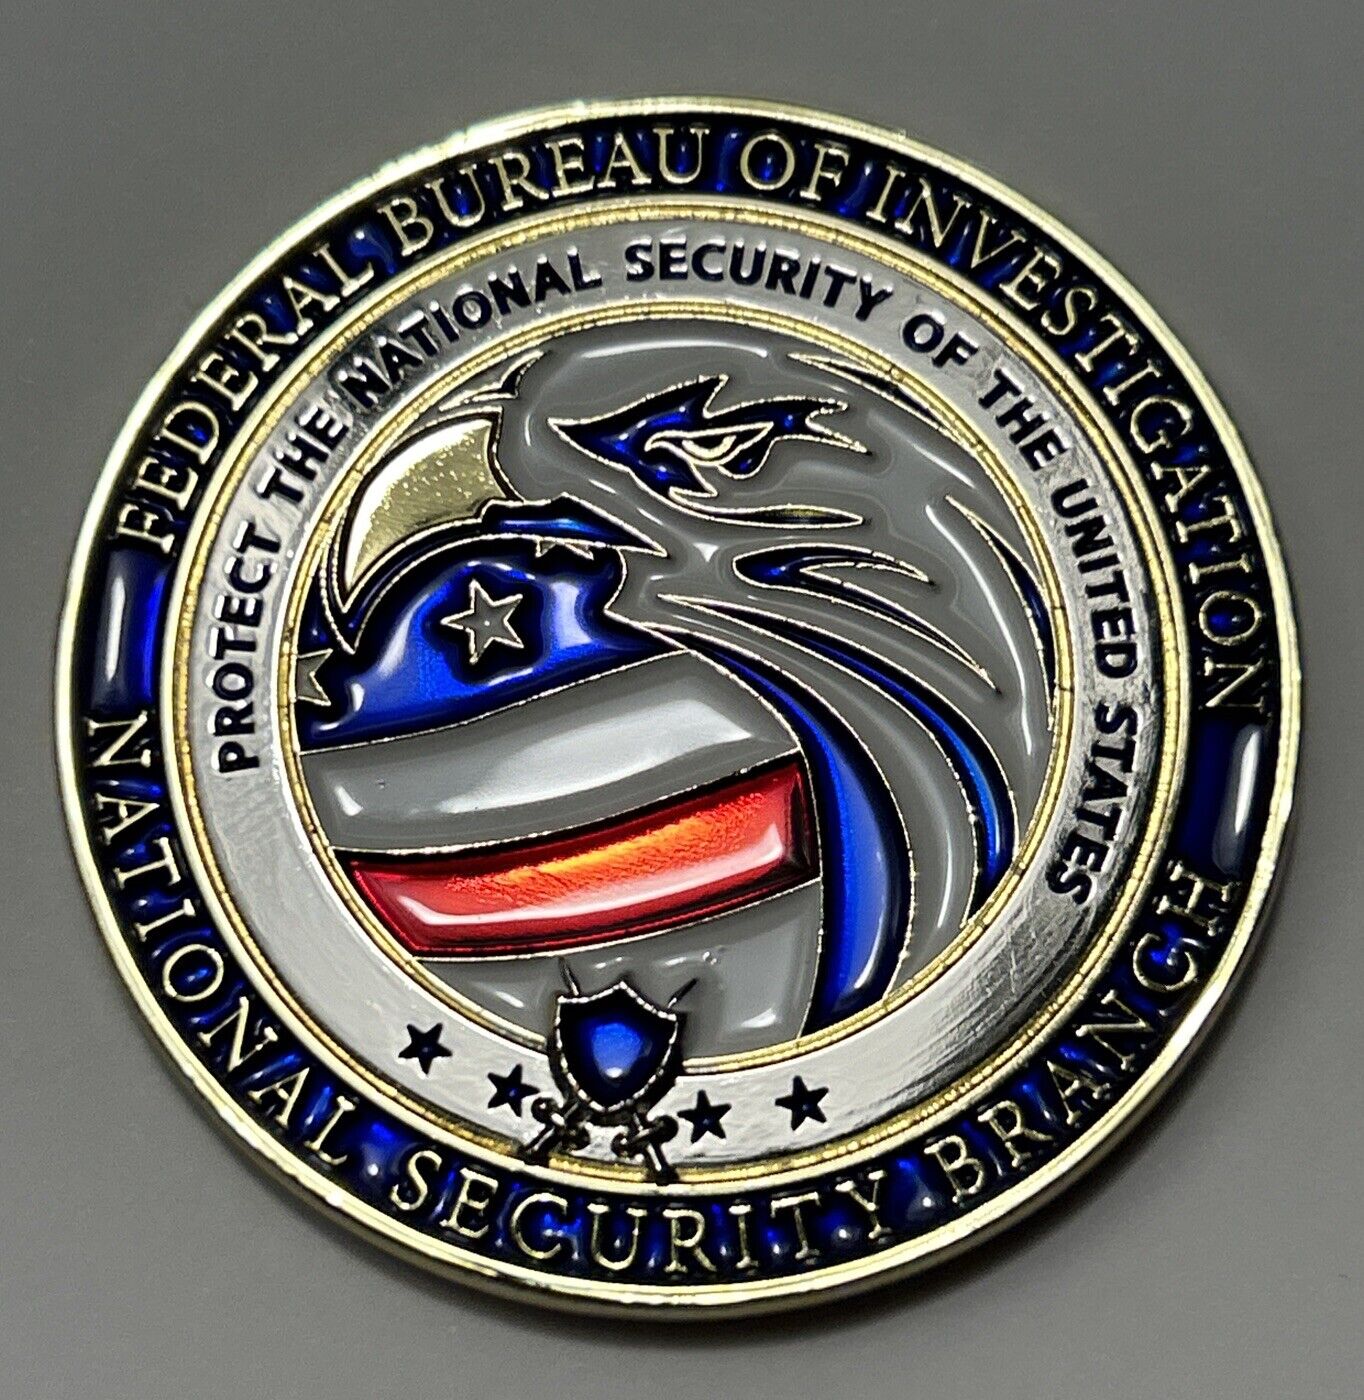 DOJ FBI National Security Branch Challenge Coin